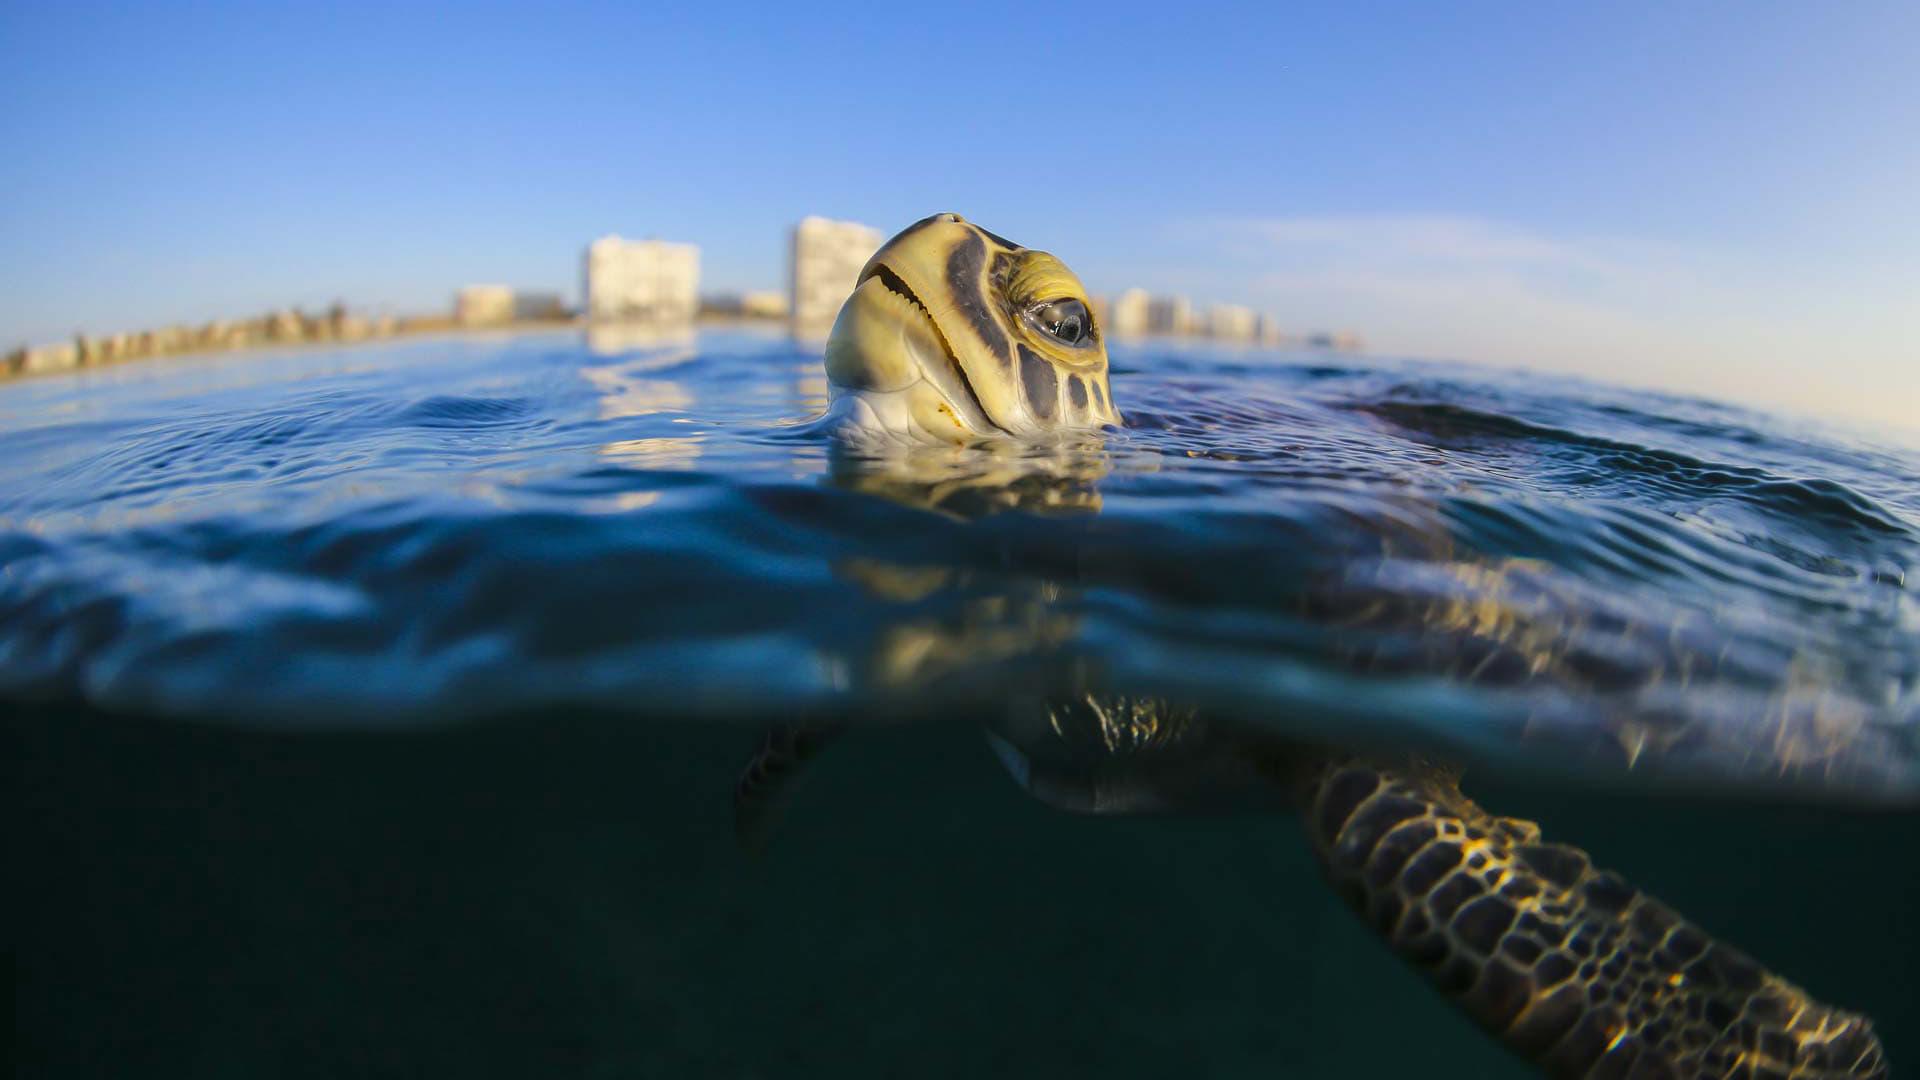 Troubled Waters: A Turtle's Tale backdrop